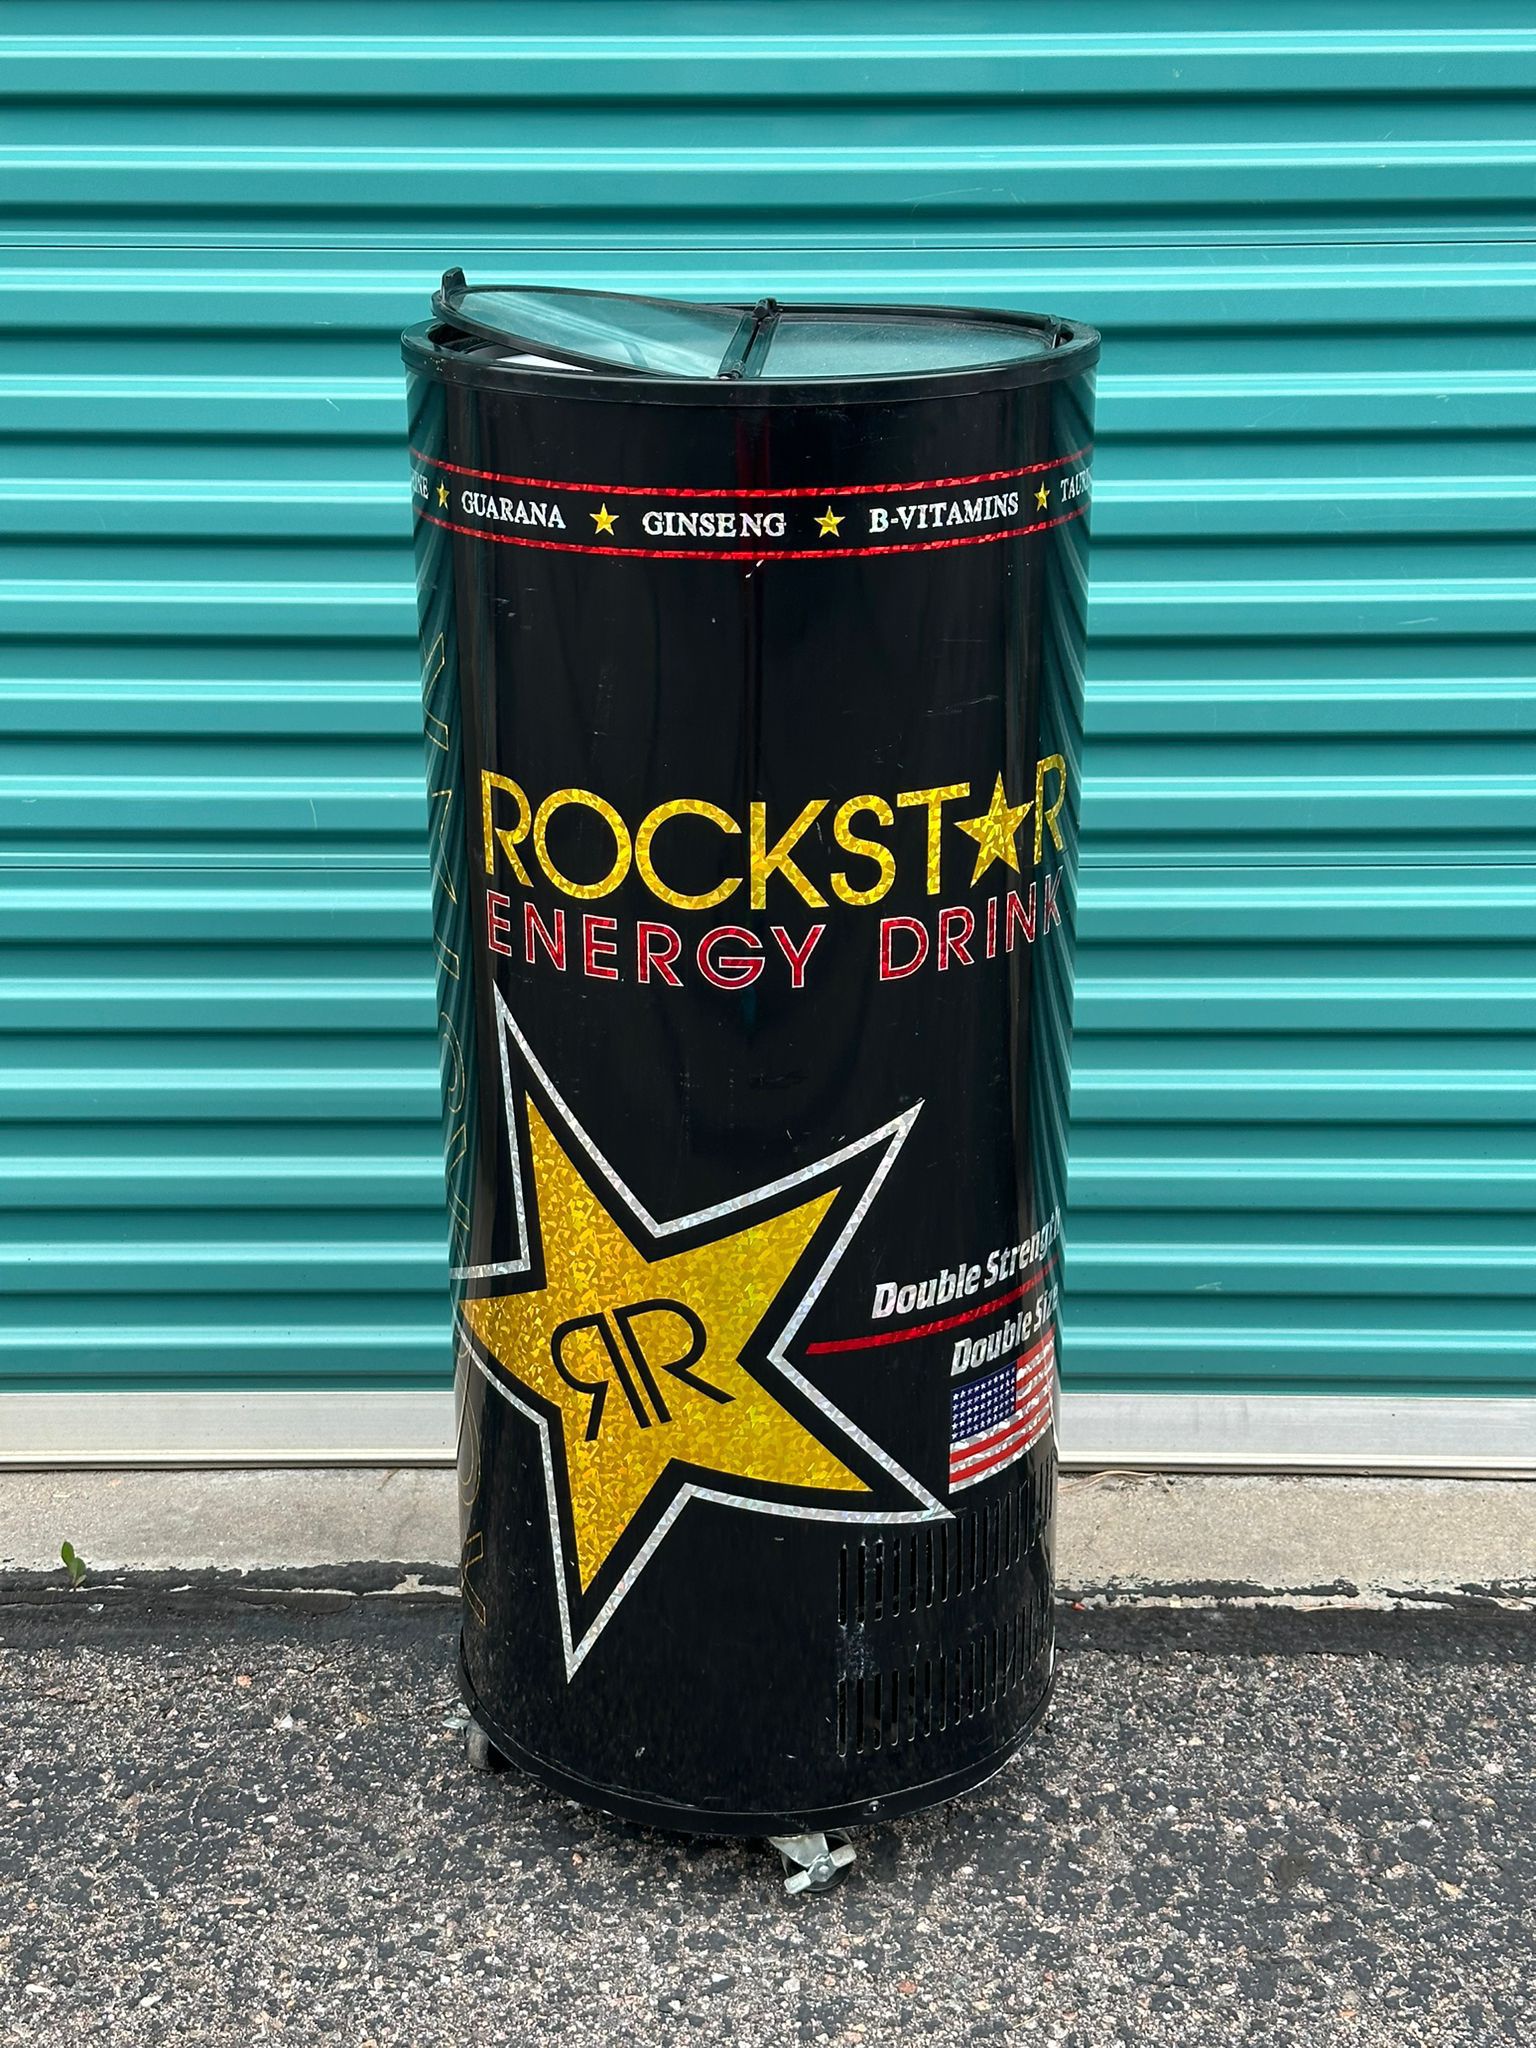 #1856 Rockstar Energy Drink Refrigerator Round Cooler